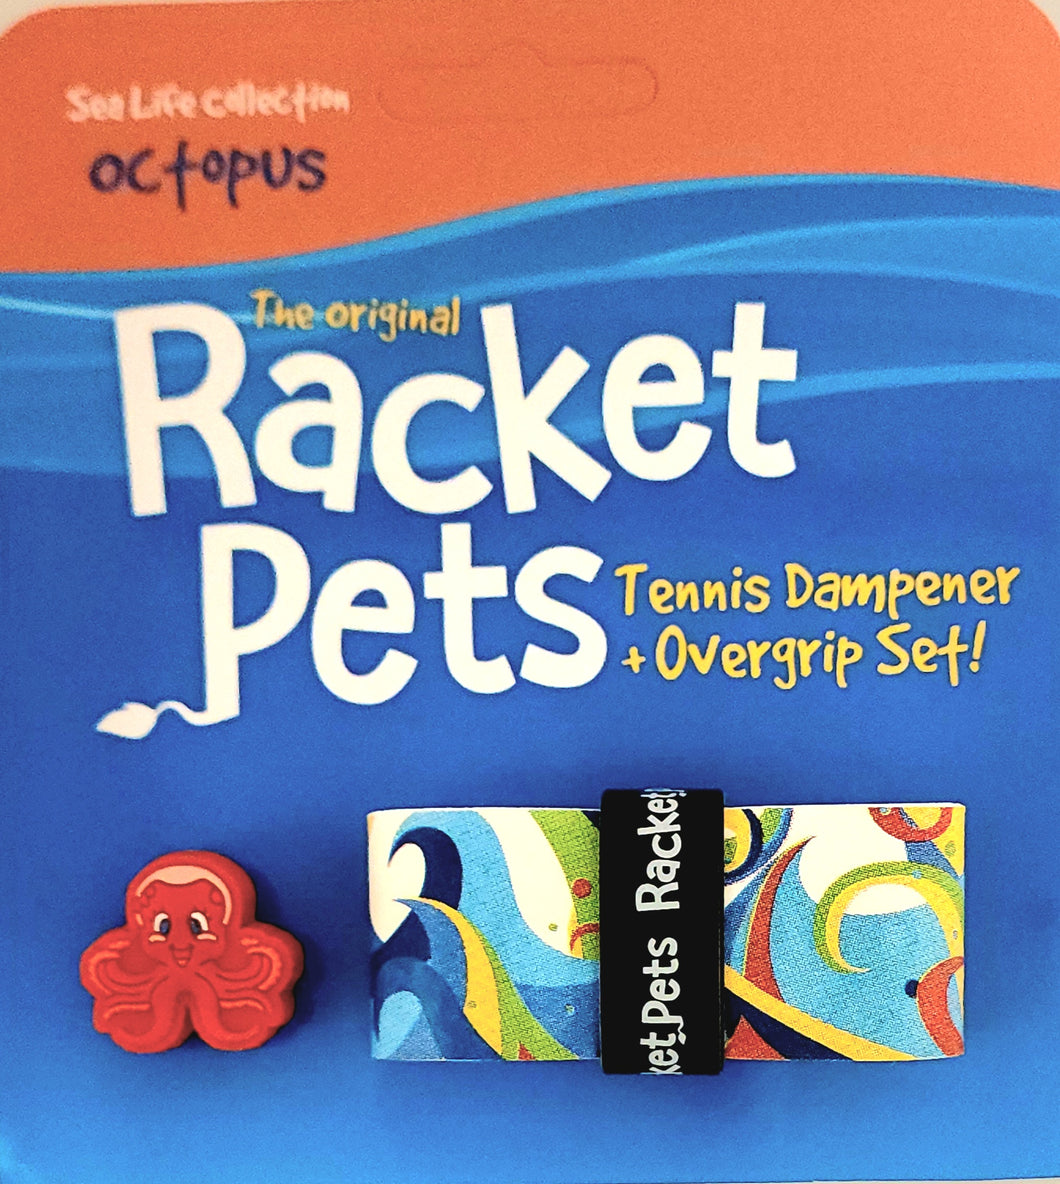 Octopus Tennis Overgrip Tape and Matching Shock Absorbing Dampener for Tennis Racket